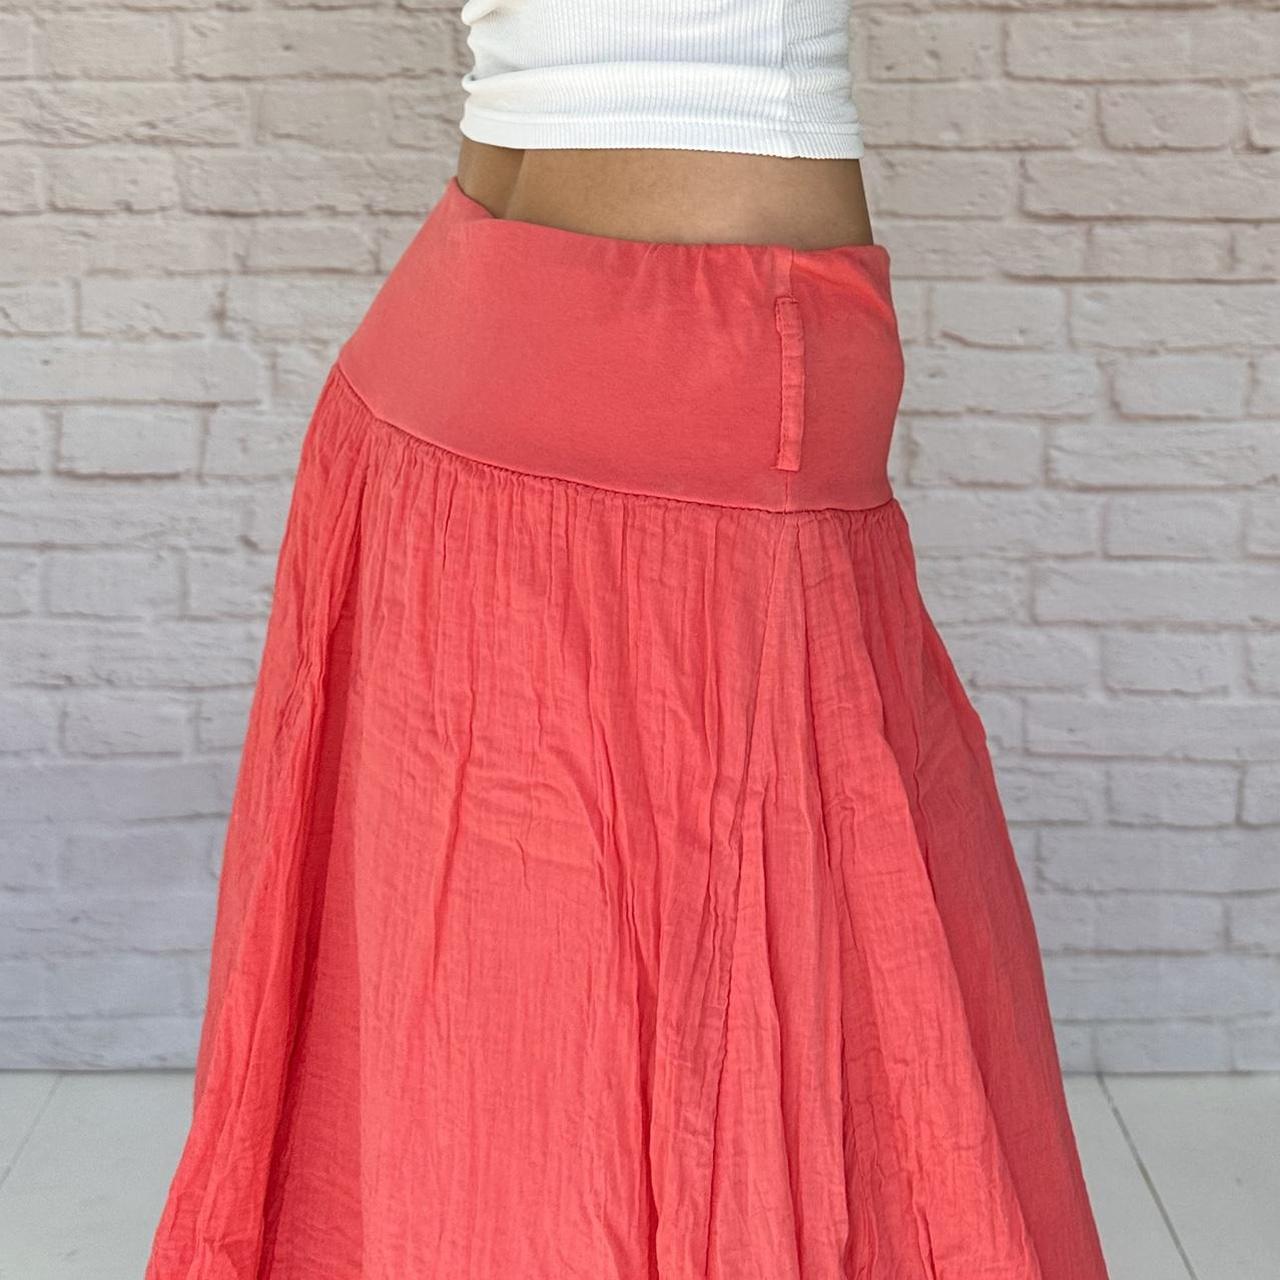 Midi skirt Coral red boho cotton midi skirt with... - Depop